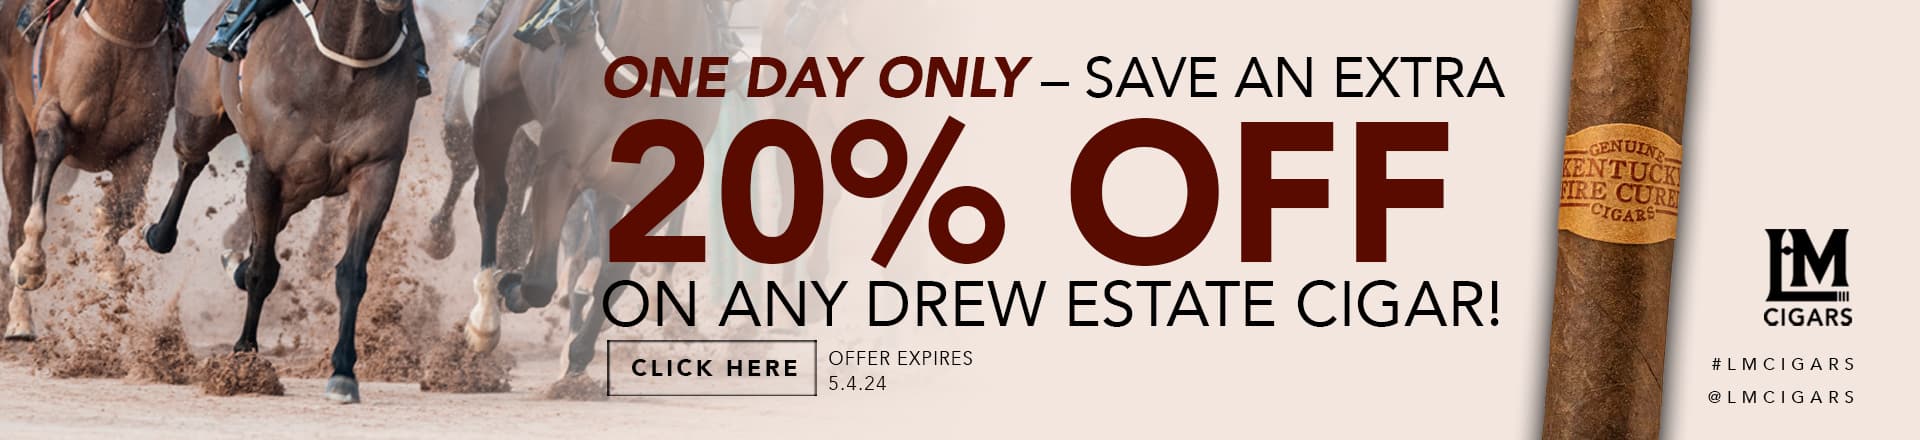 Save 20% on any Drew Estate cigar